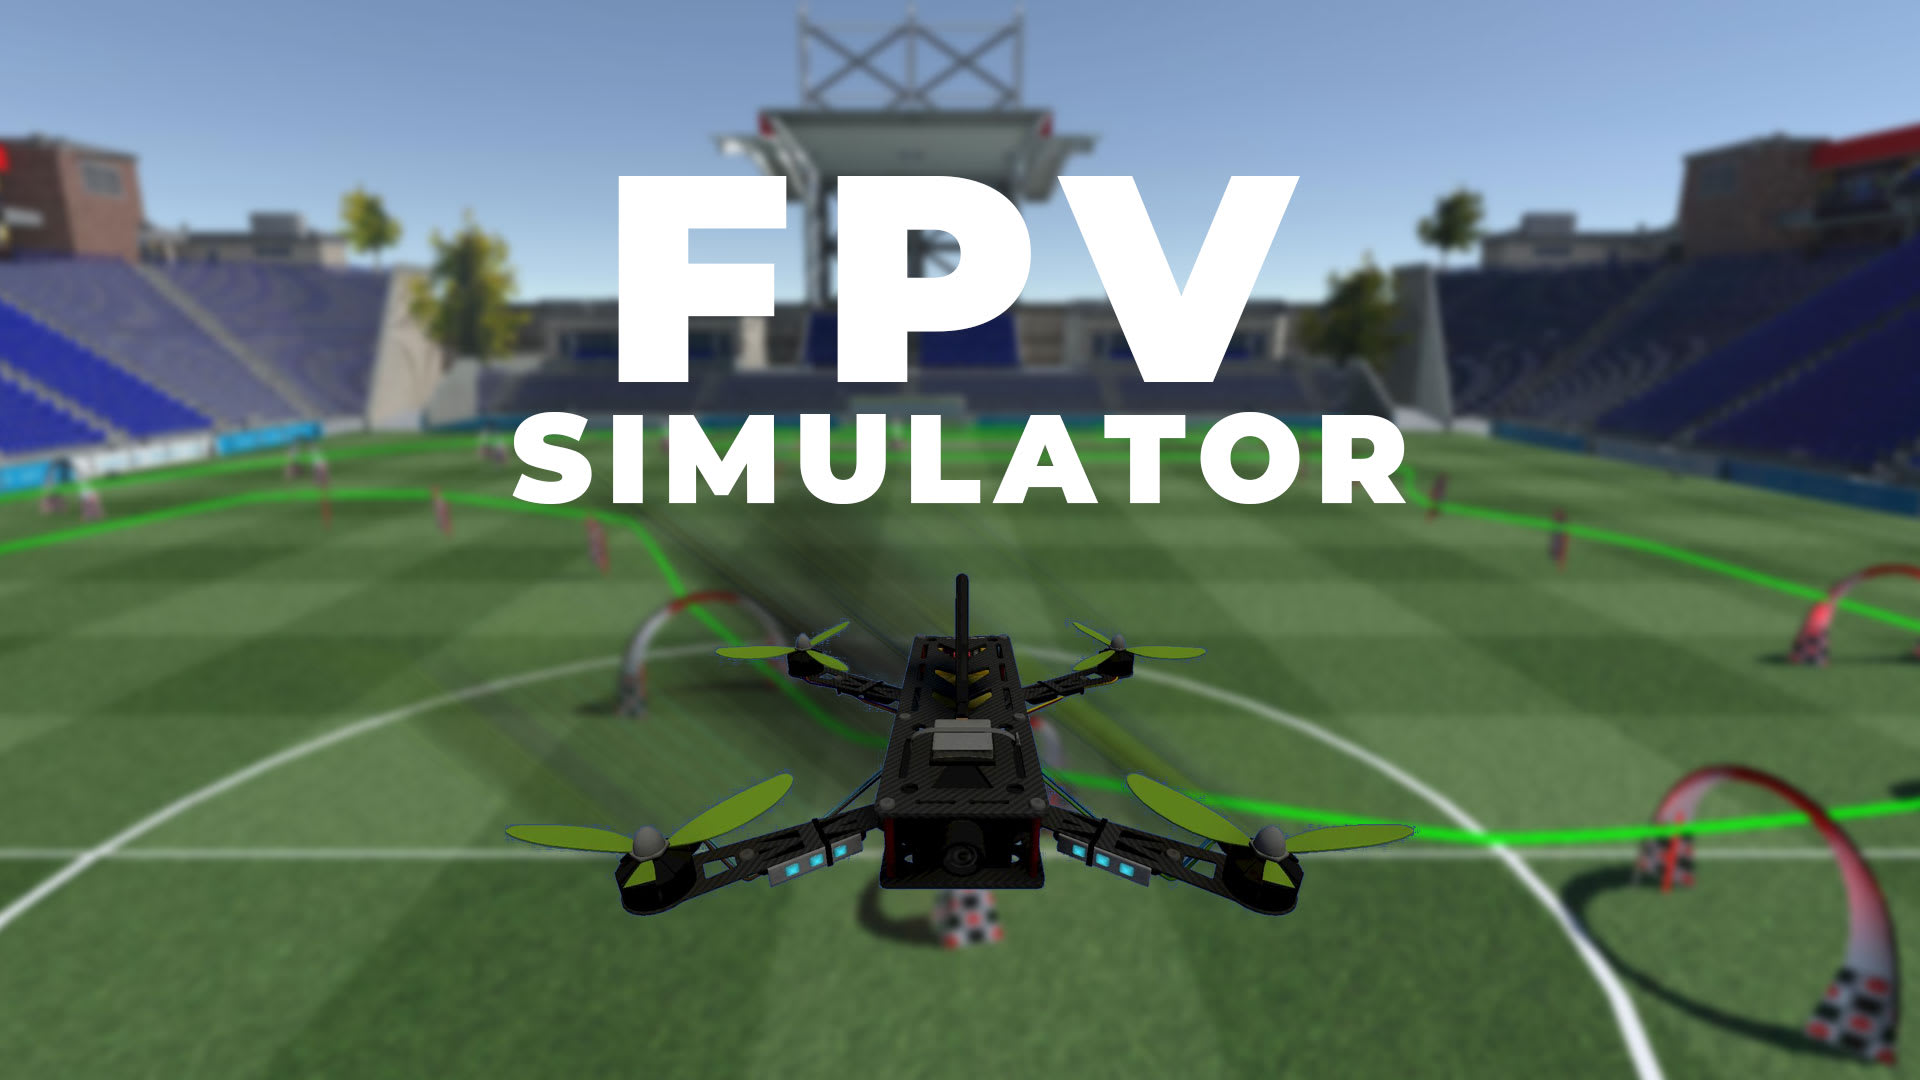 FPV Simulator